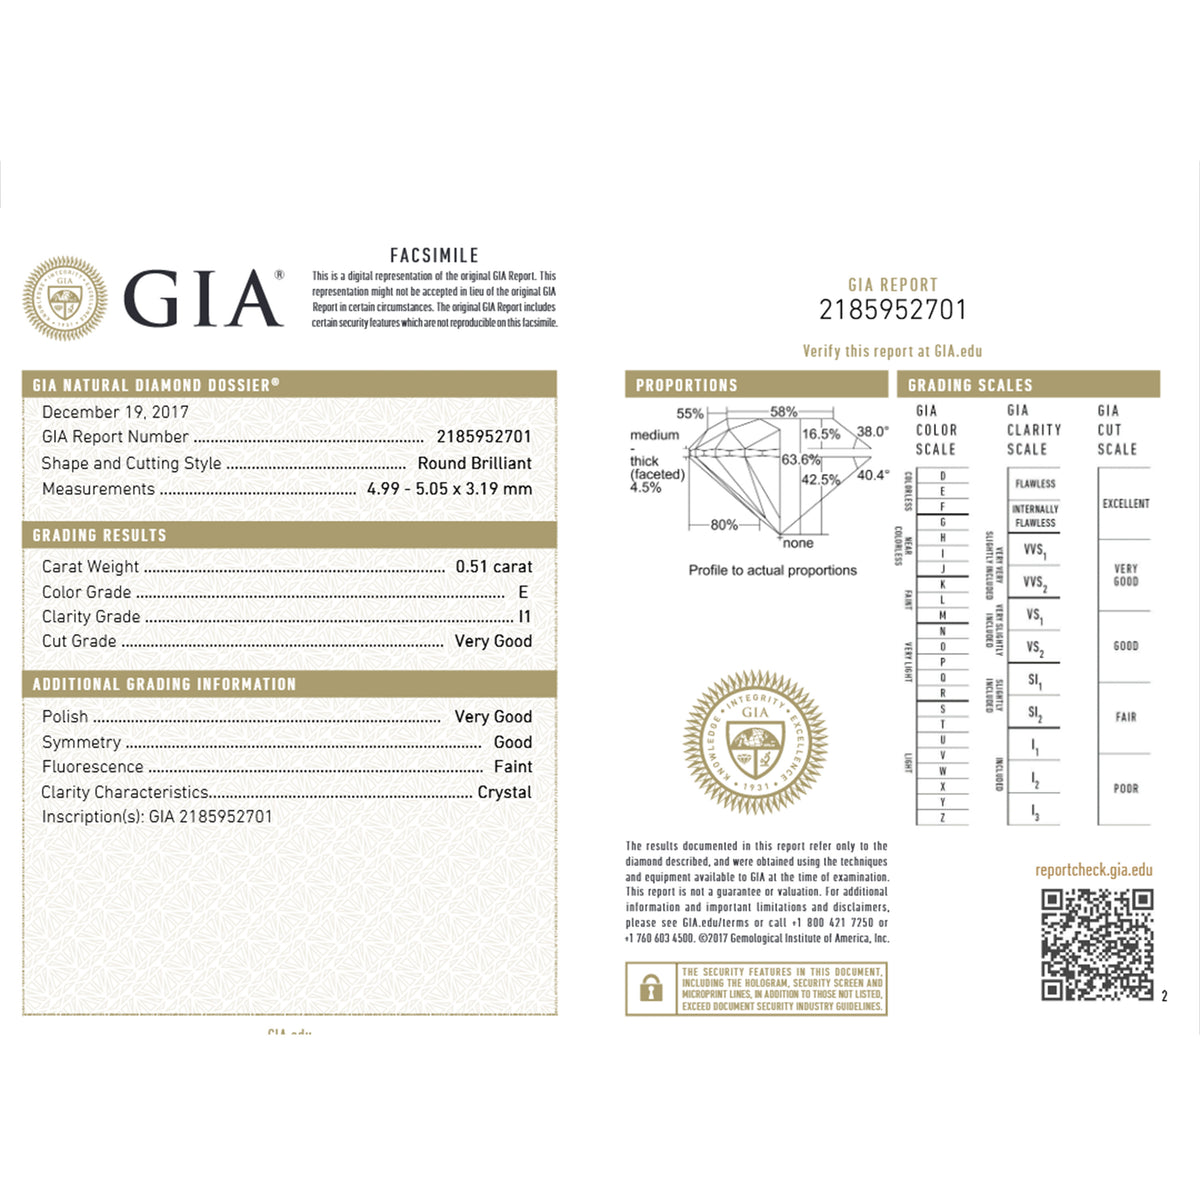 GIA Certified Diamond Stud Earrings in 14K White Gold (1.01 ctw E/I1)